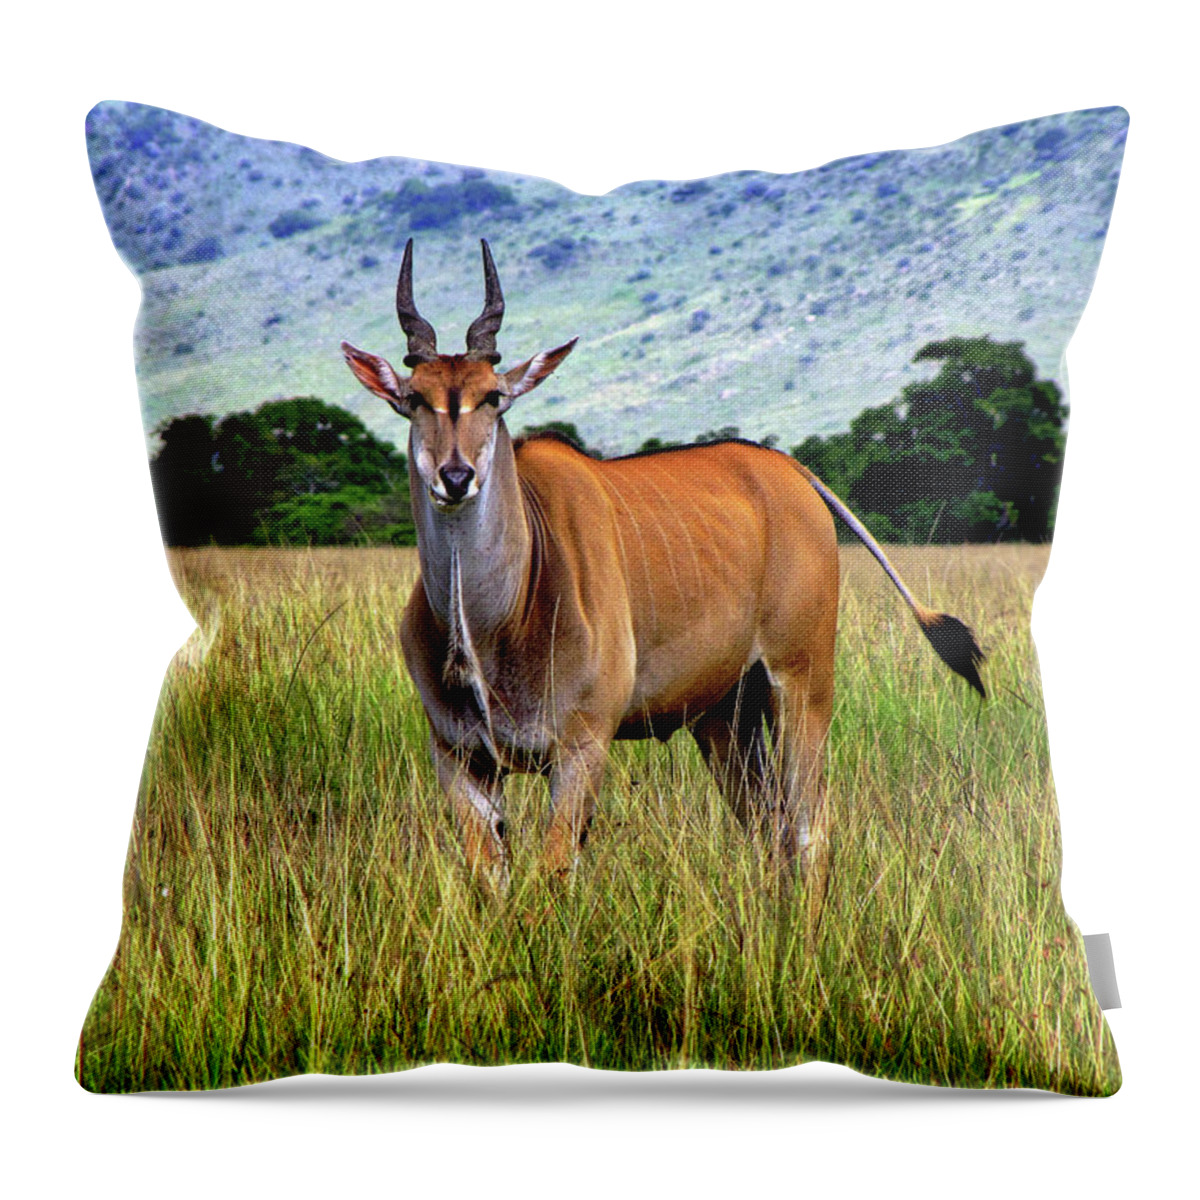 Kenya Throw Pillow featuring the photograph Kenya #44 by Paul James Bannerman